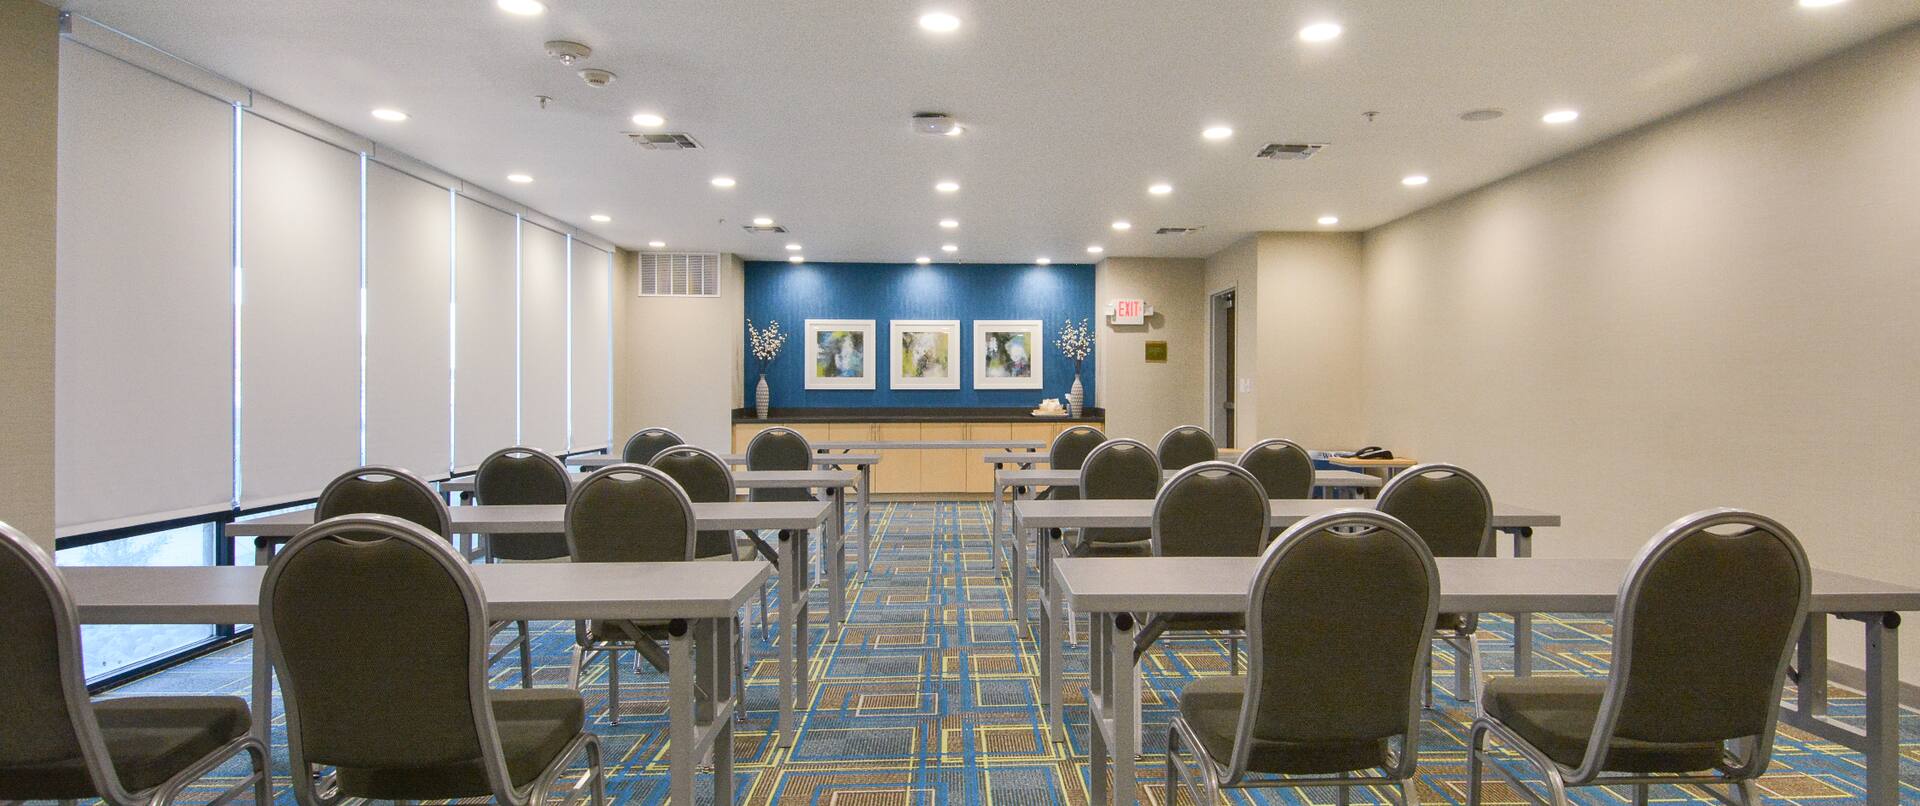 Meeting Room Classroom Style